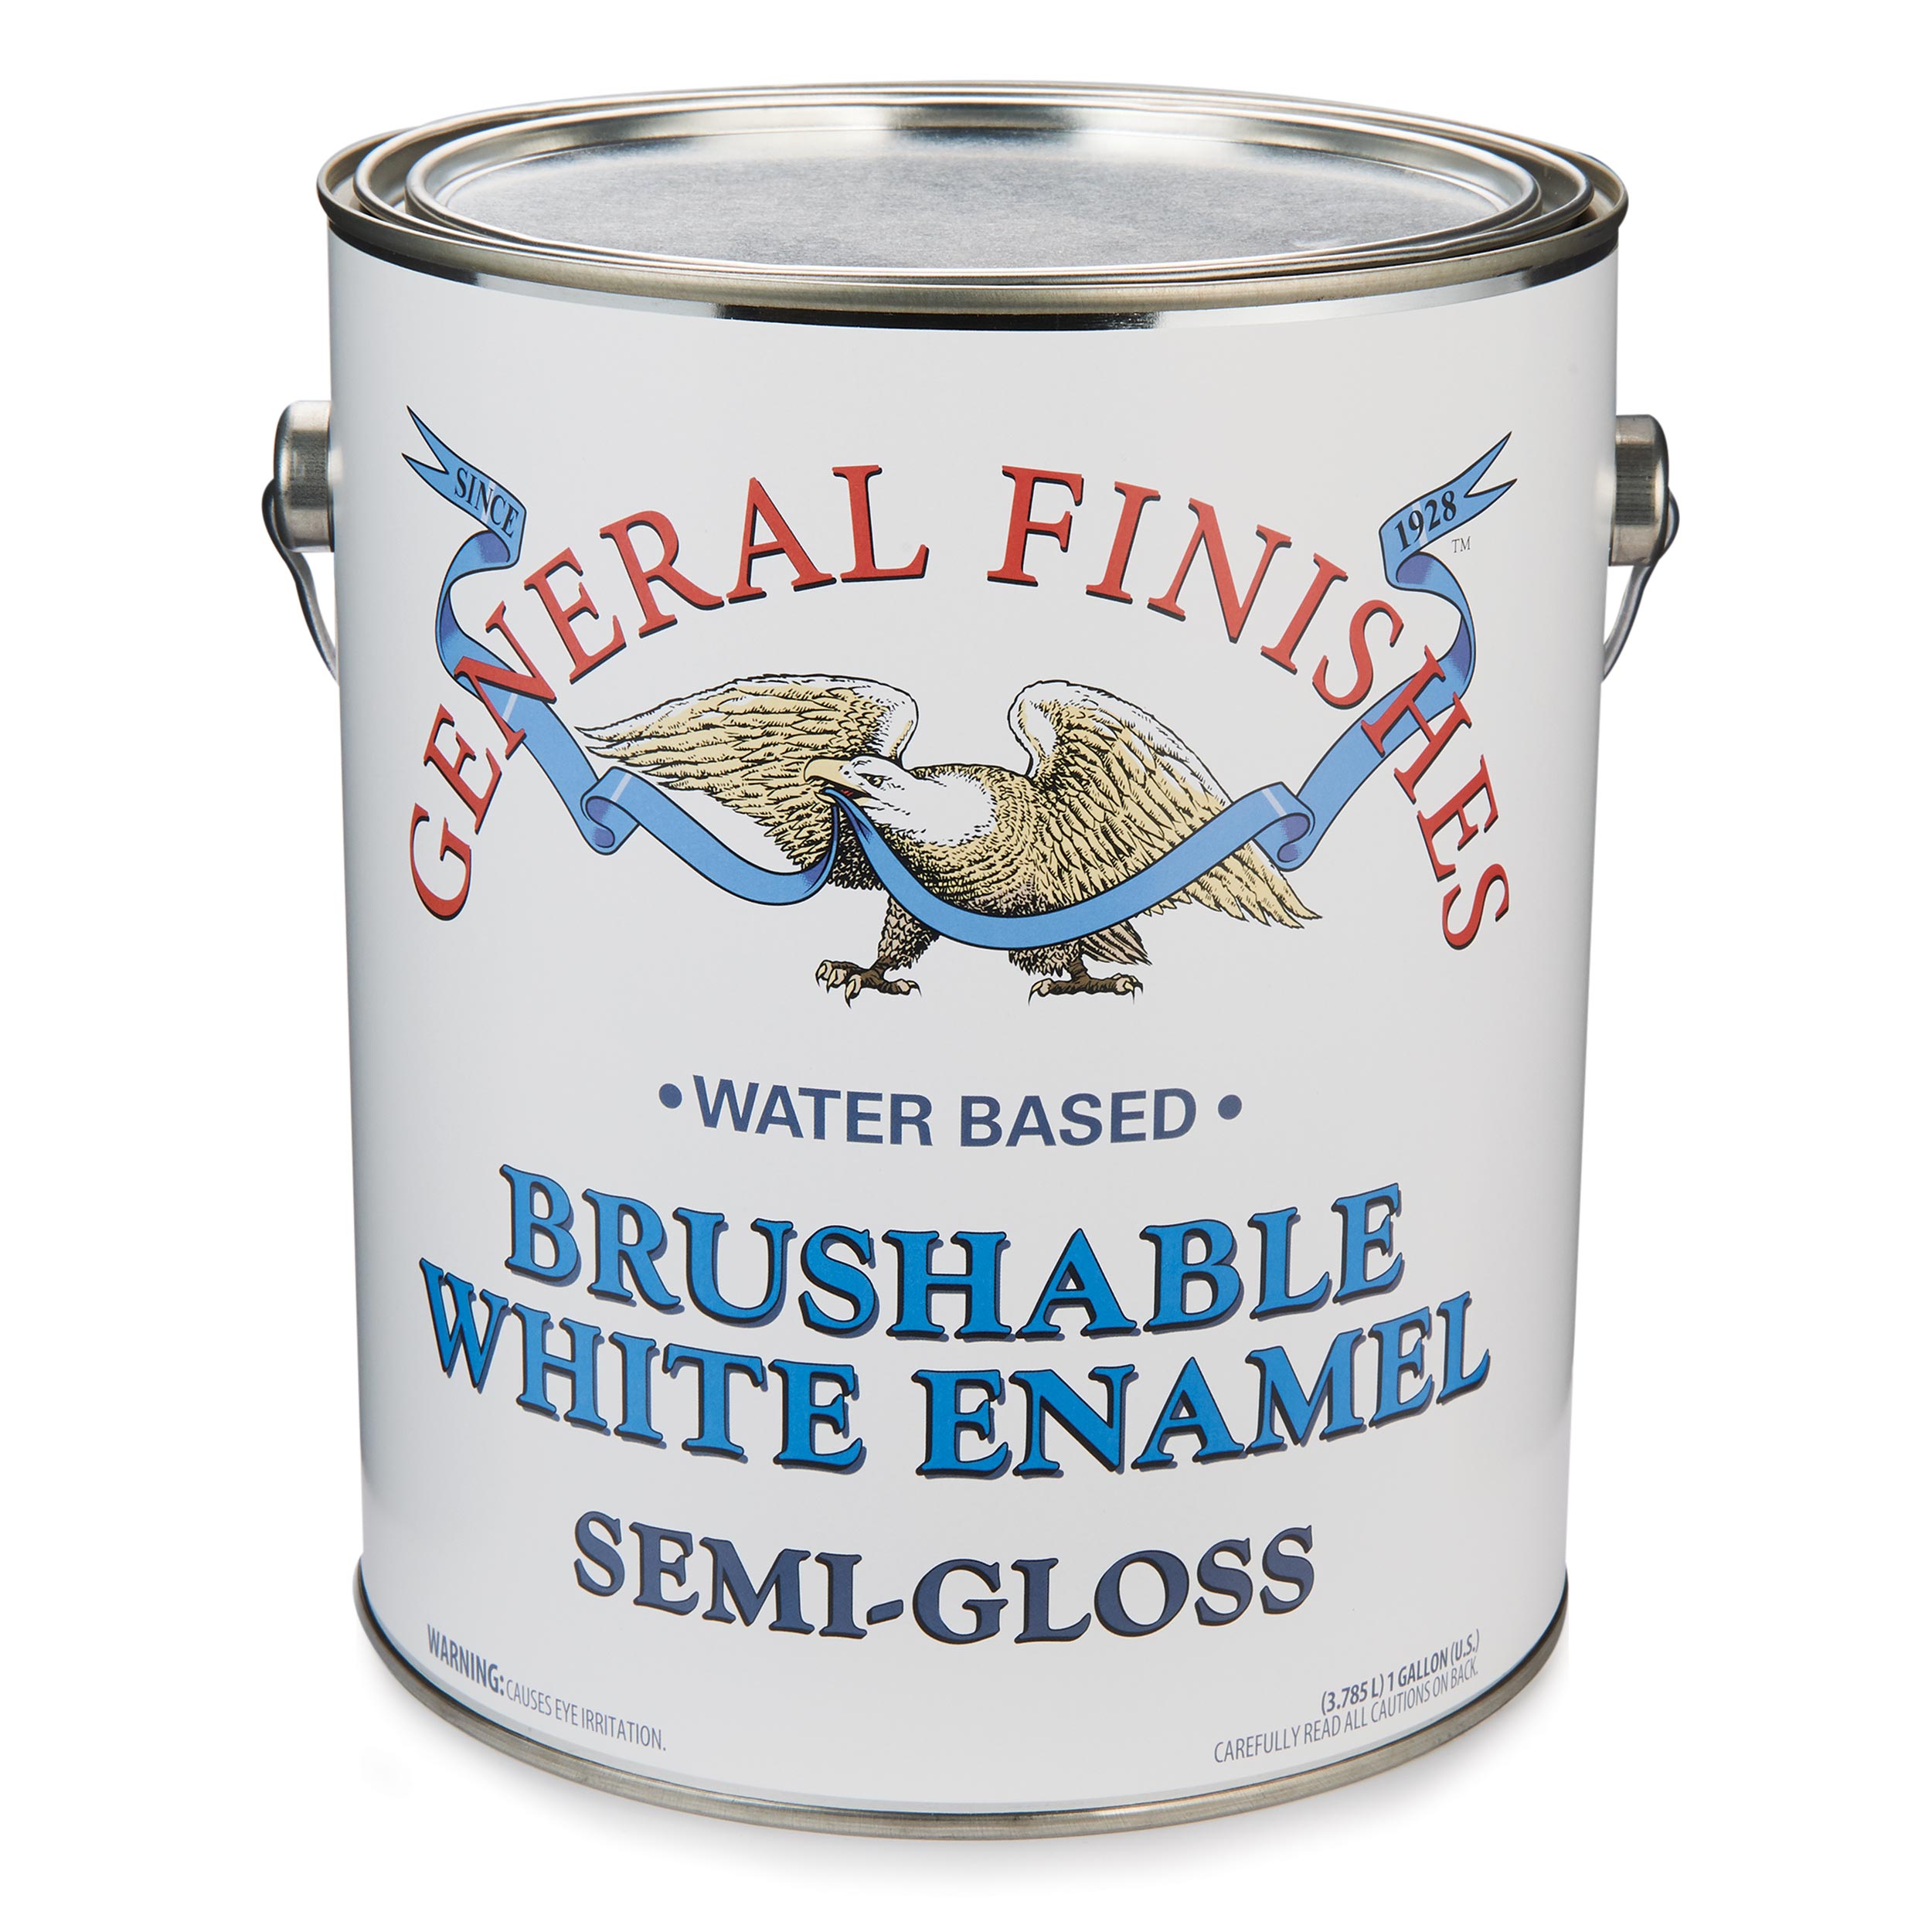 General Finishes White Enamel Semi-gloss Gallon